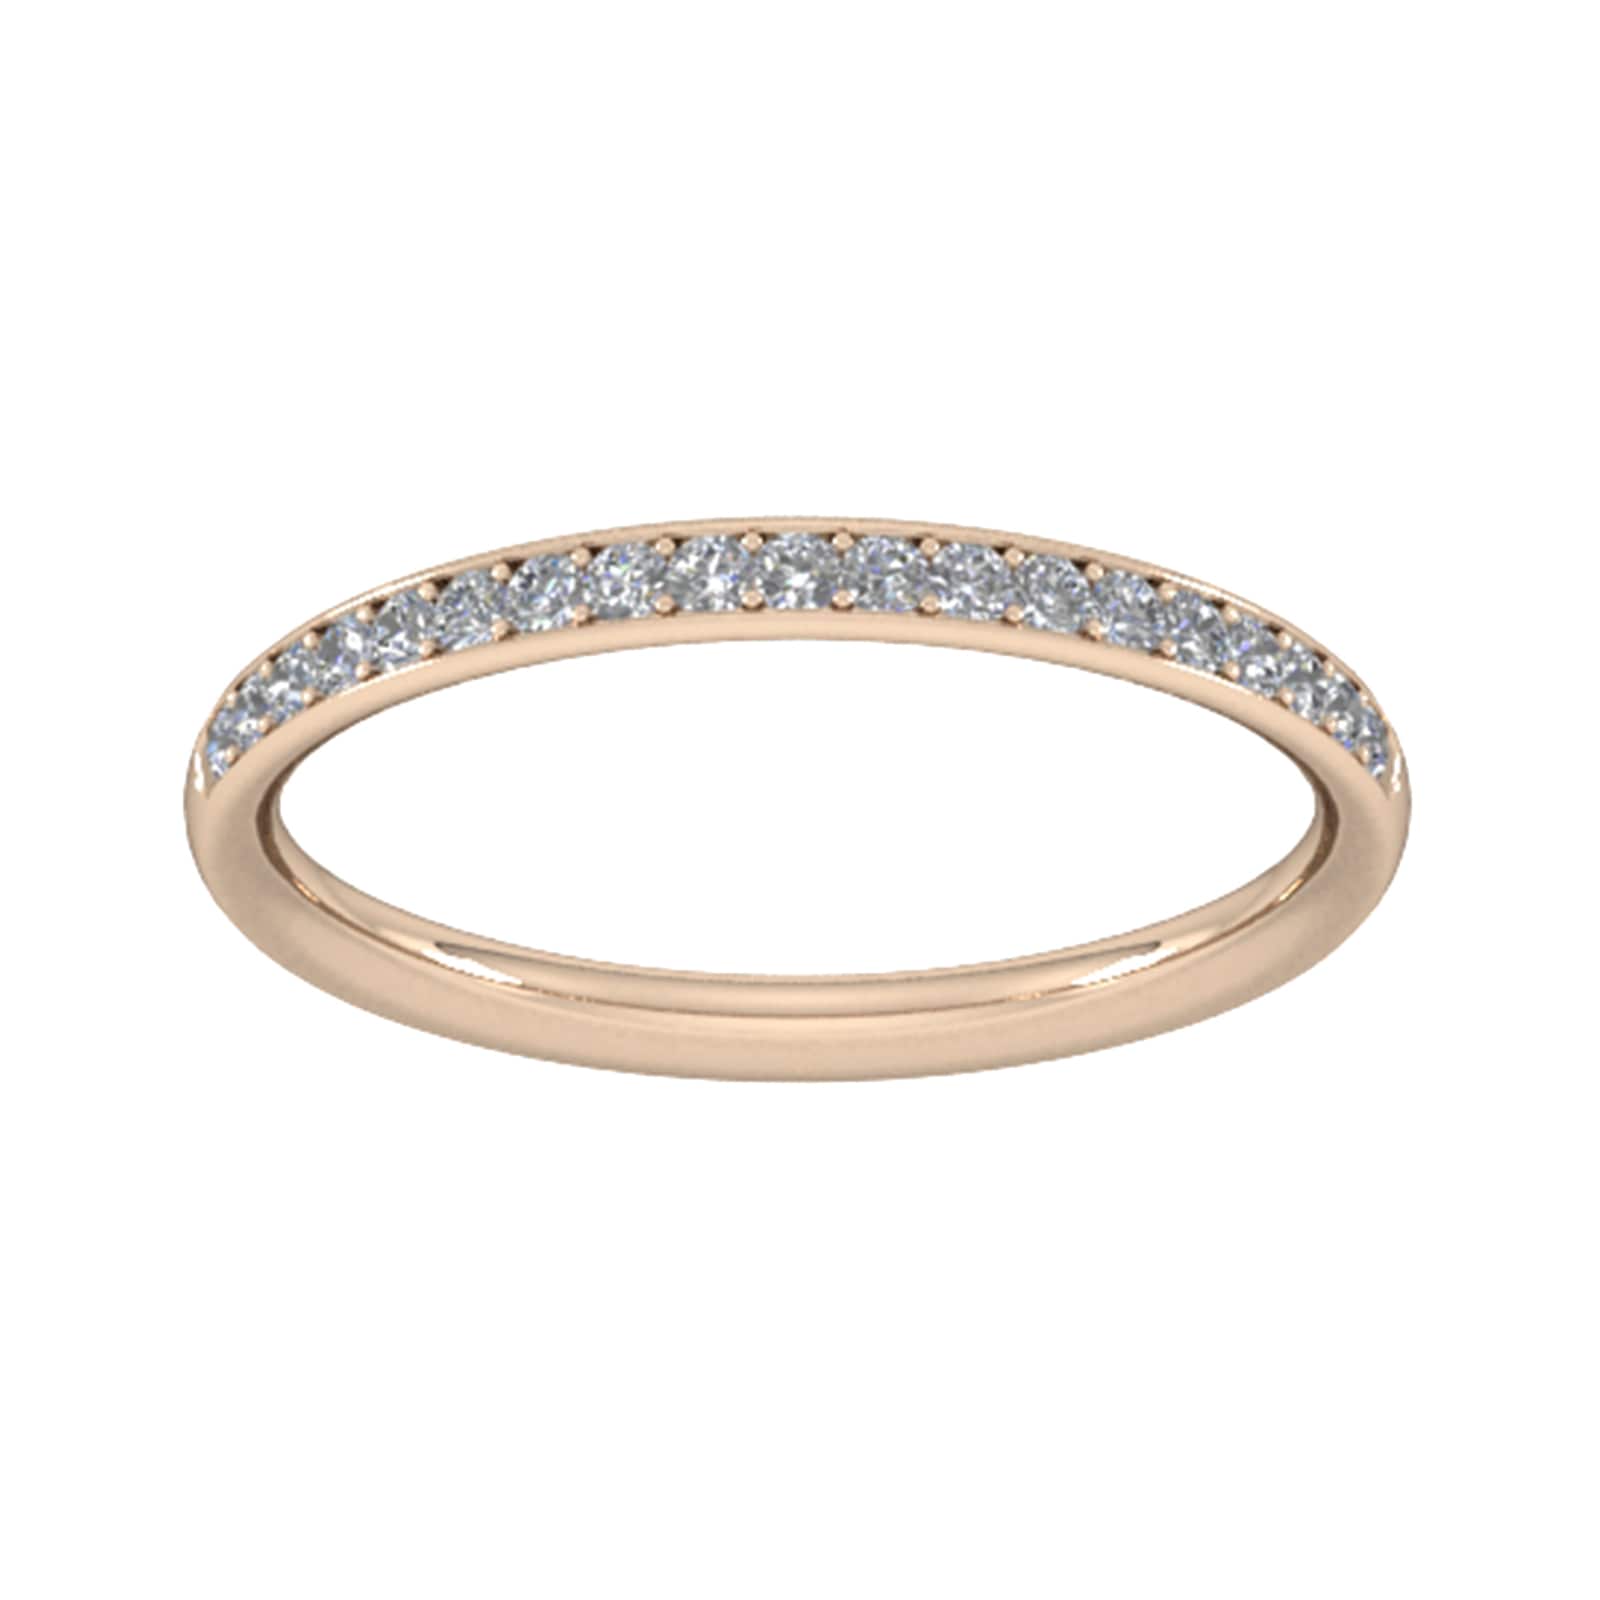 0.18 Carat Total Weight Brilliant Cut Grain Set Diamond Wedding Ring In 18 Carat Rose Gold - Ring Size S